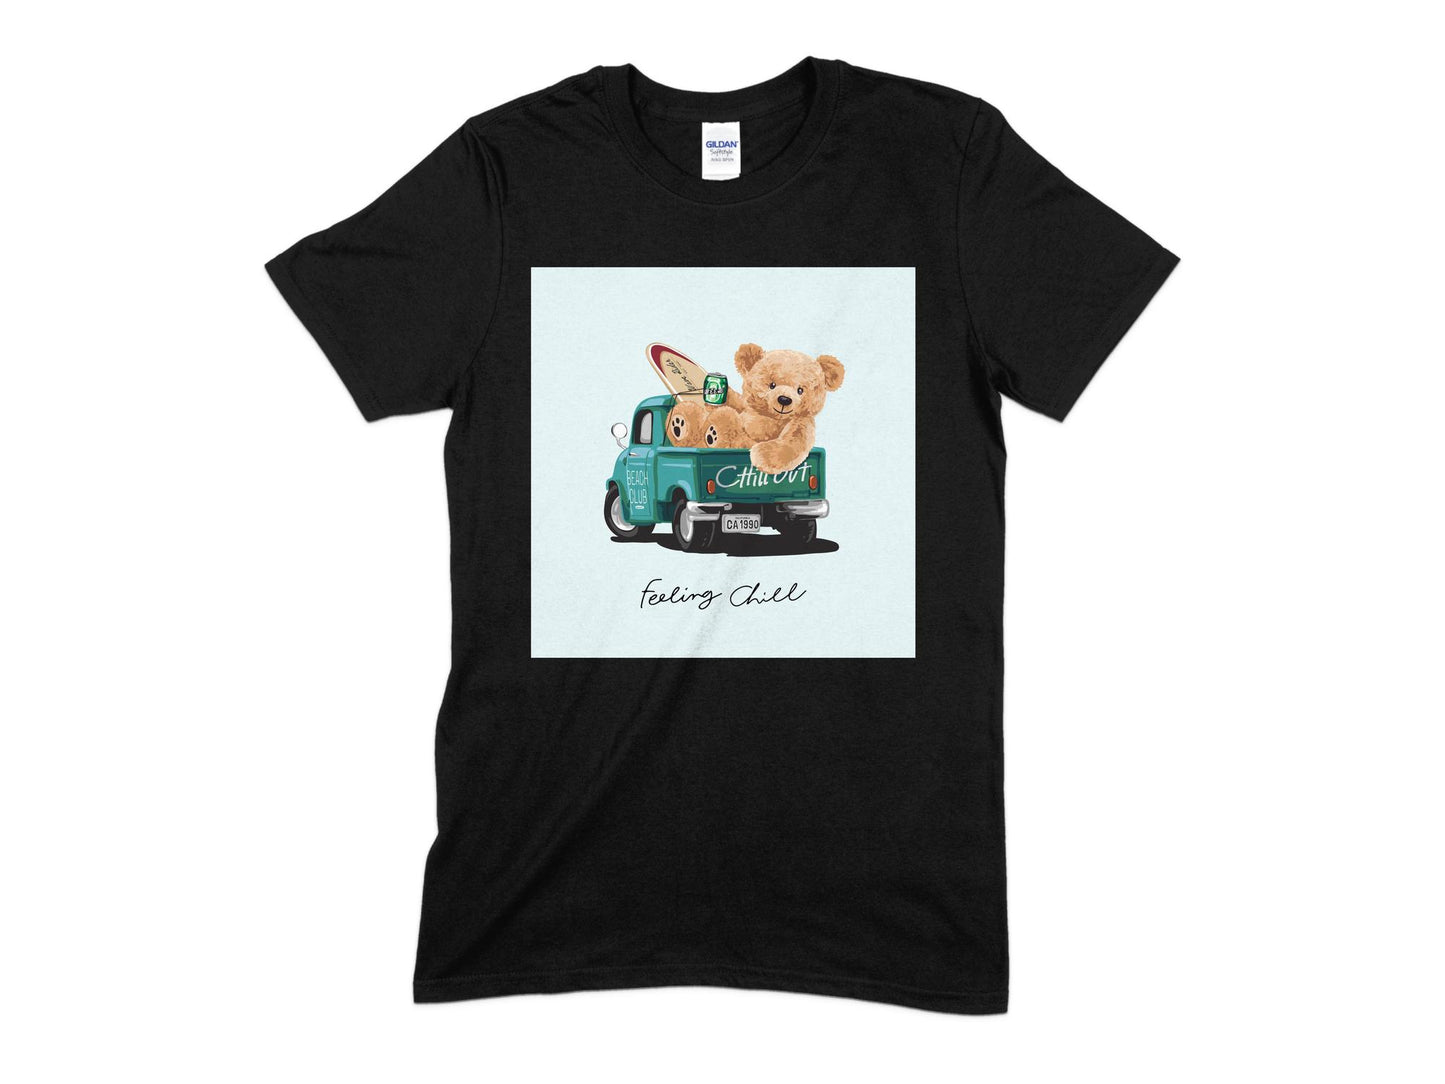 Feeling Chill T-Shirt, Cute Teddy Bear T-Shirt